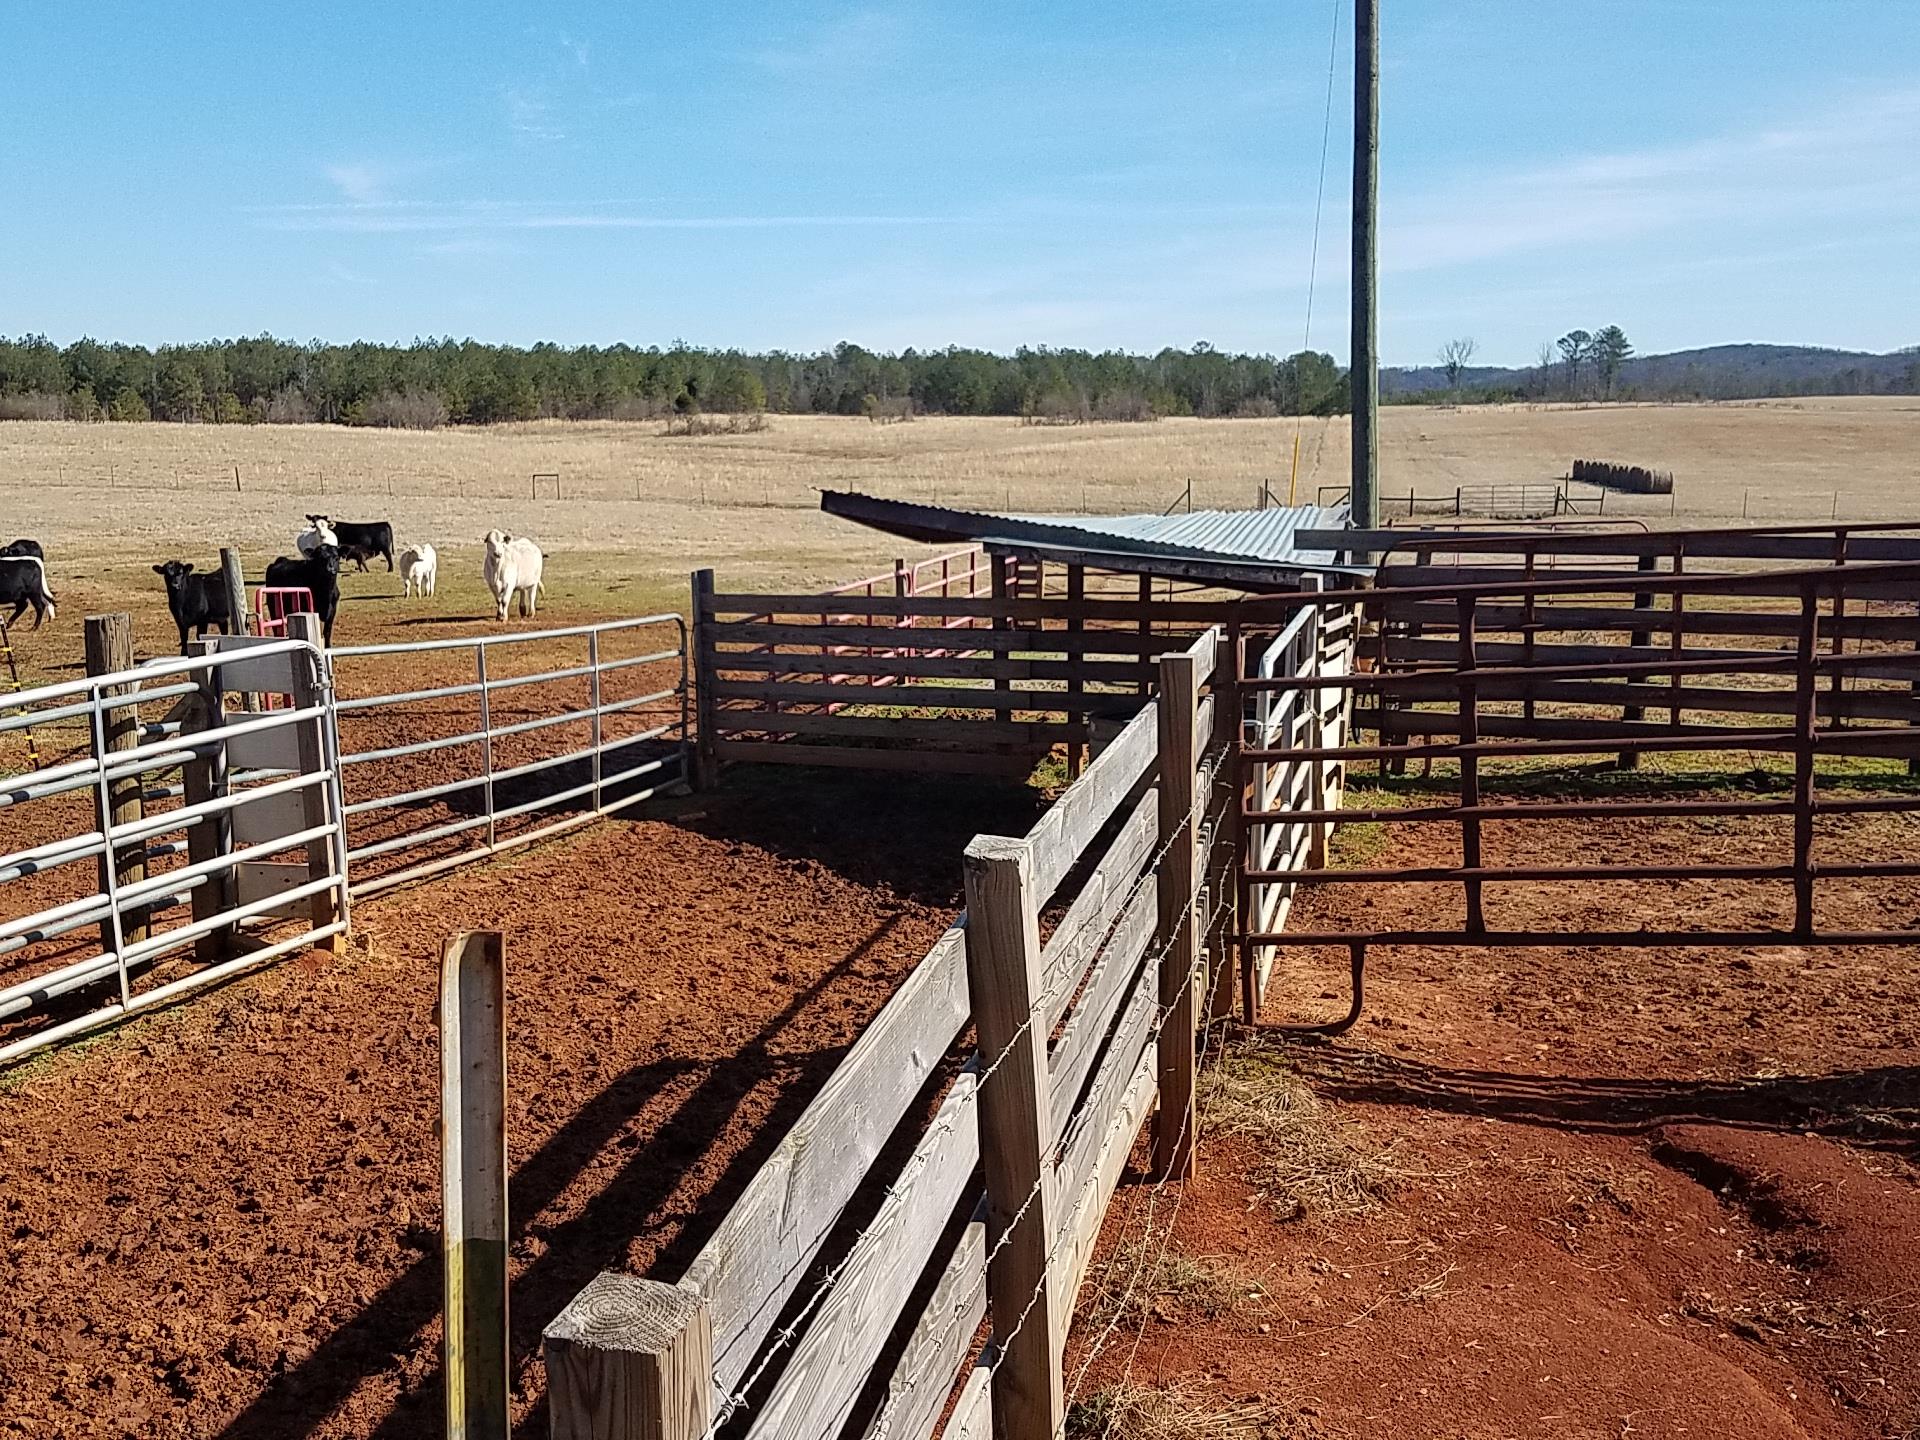 Harris Farm-Cattle Farm For Sale : Ranch for Sale : Lincoln ...